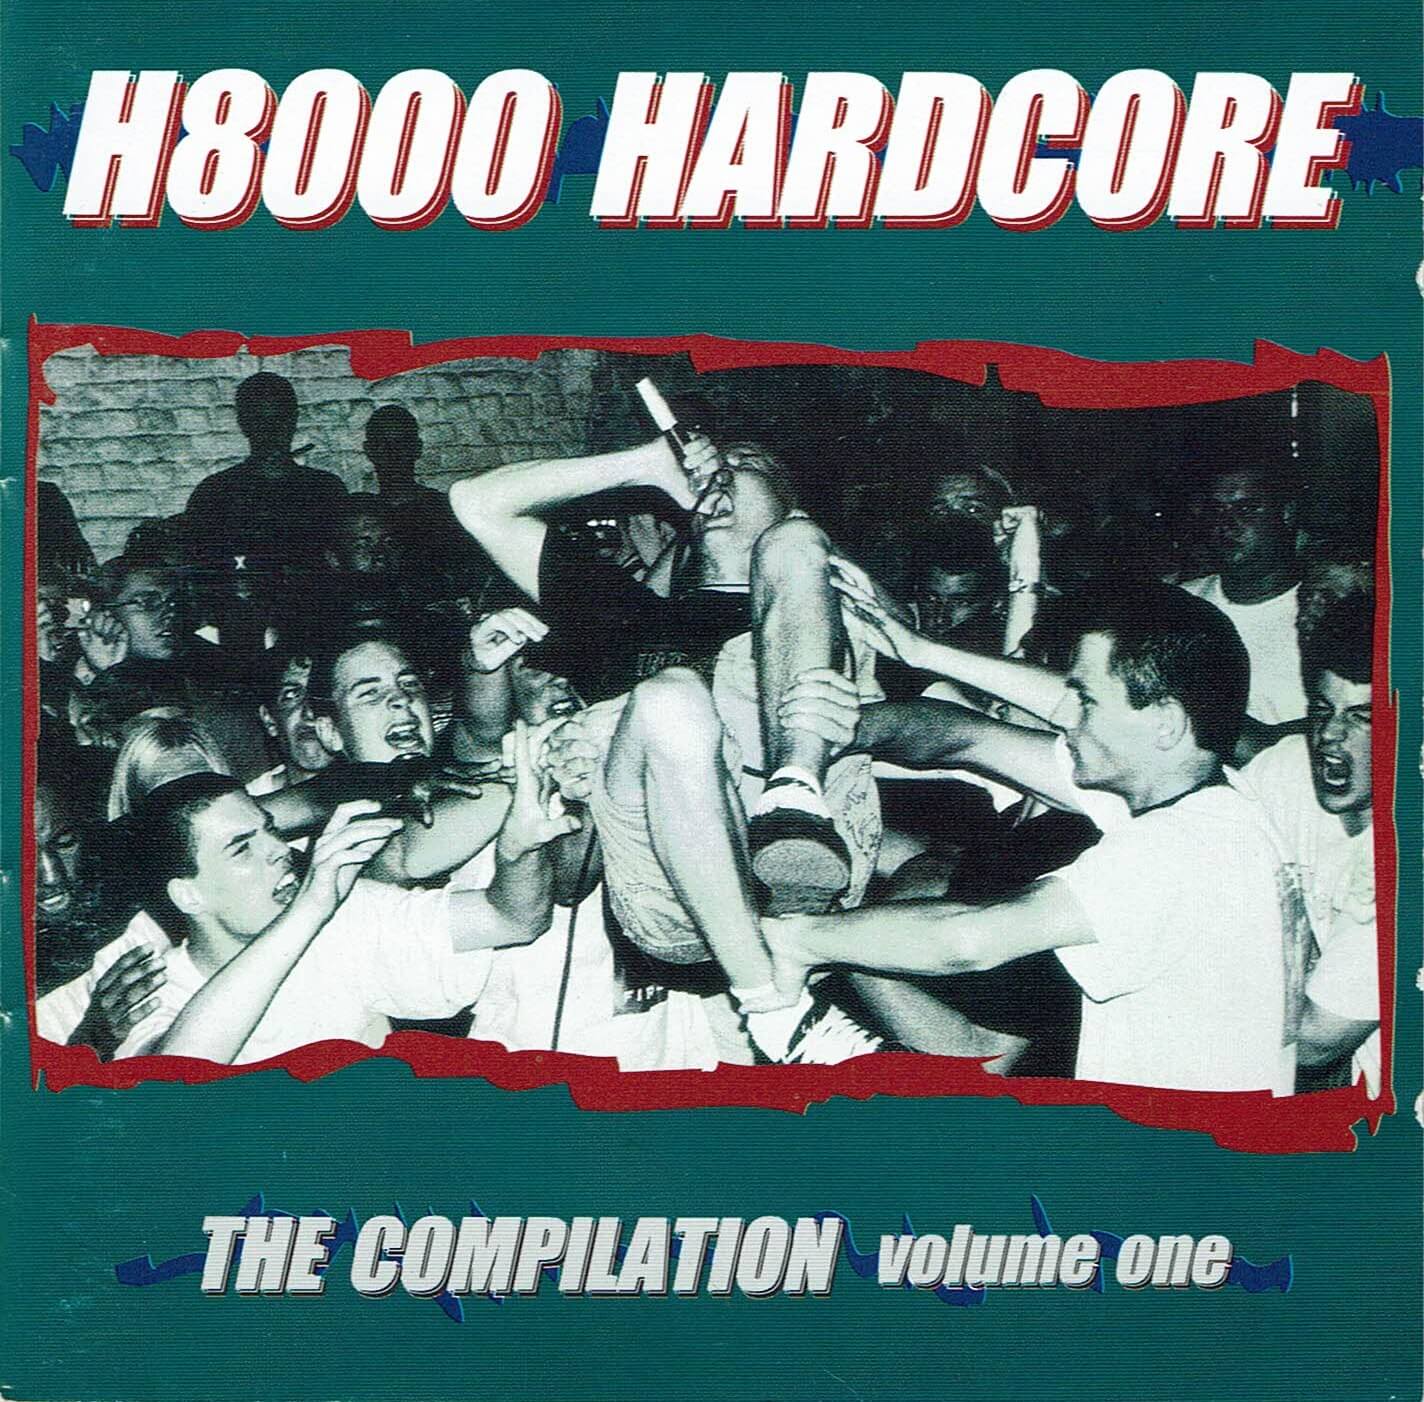 VA H8000 Compilation Volume One LP